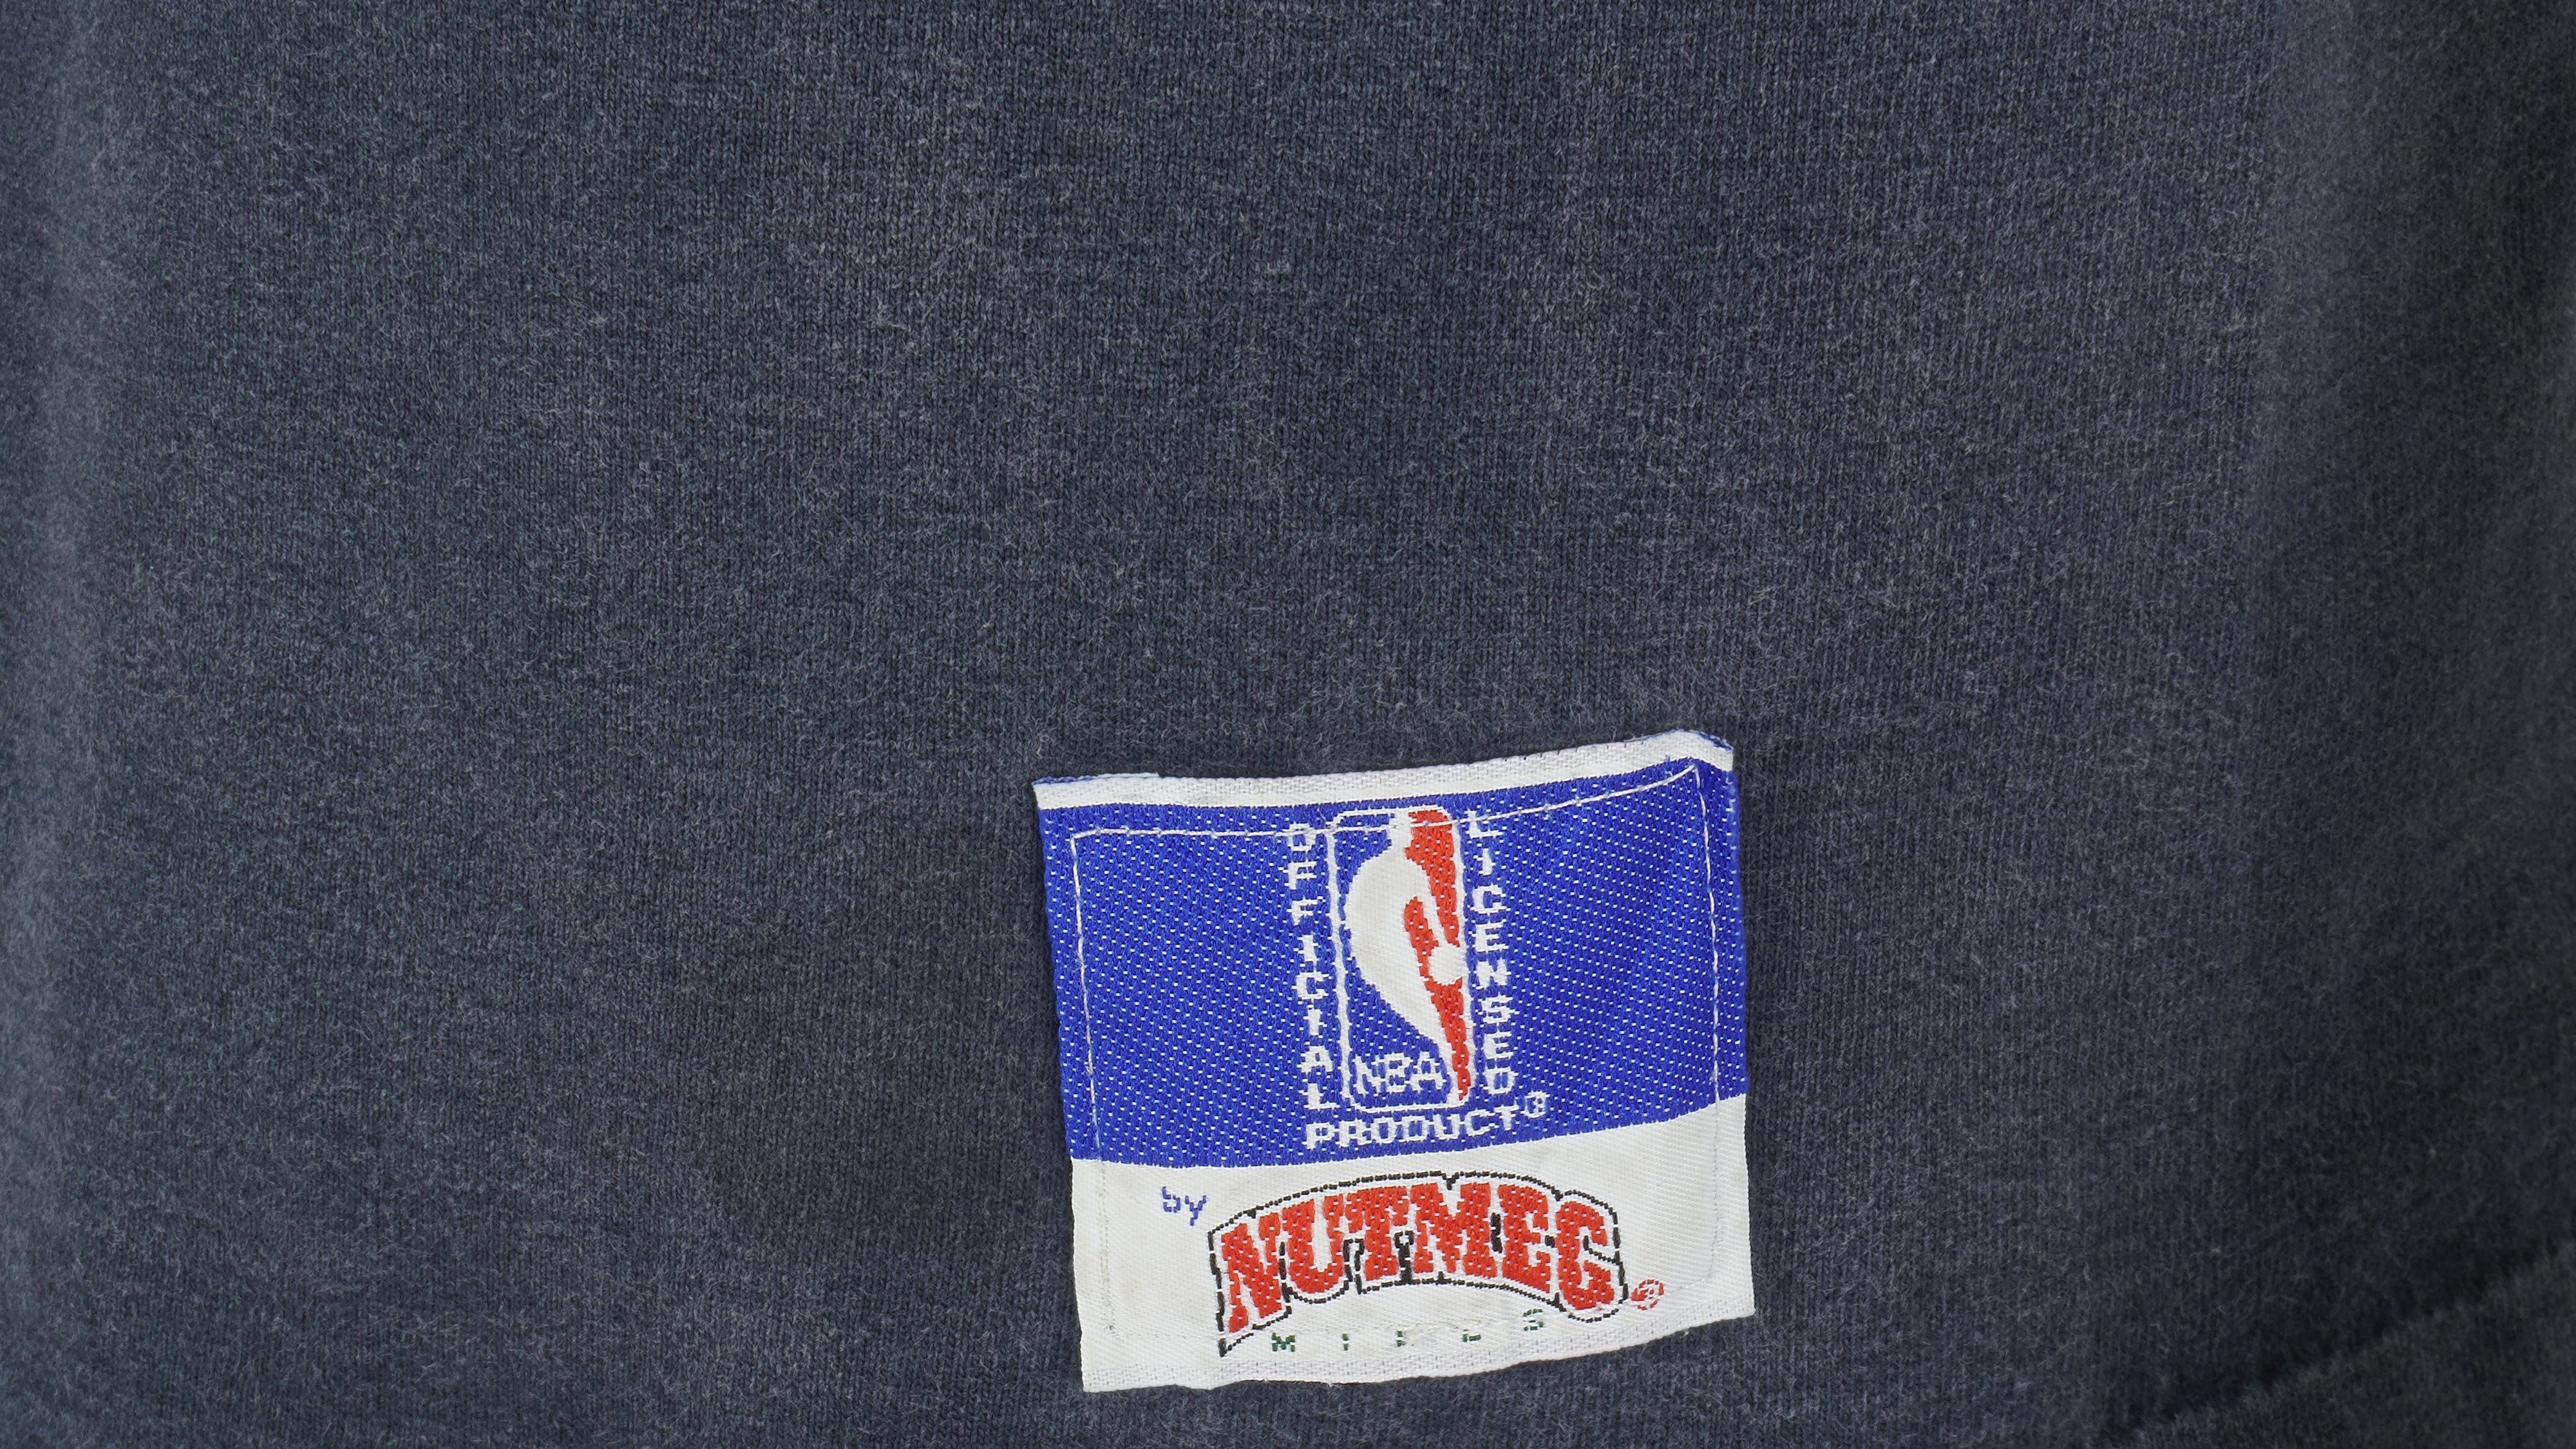 Vintage 90s Nutmeg NBA Chicago Bulls Track Jacket 